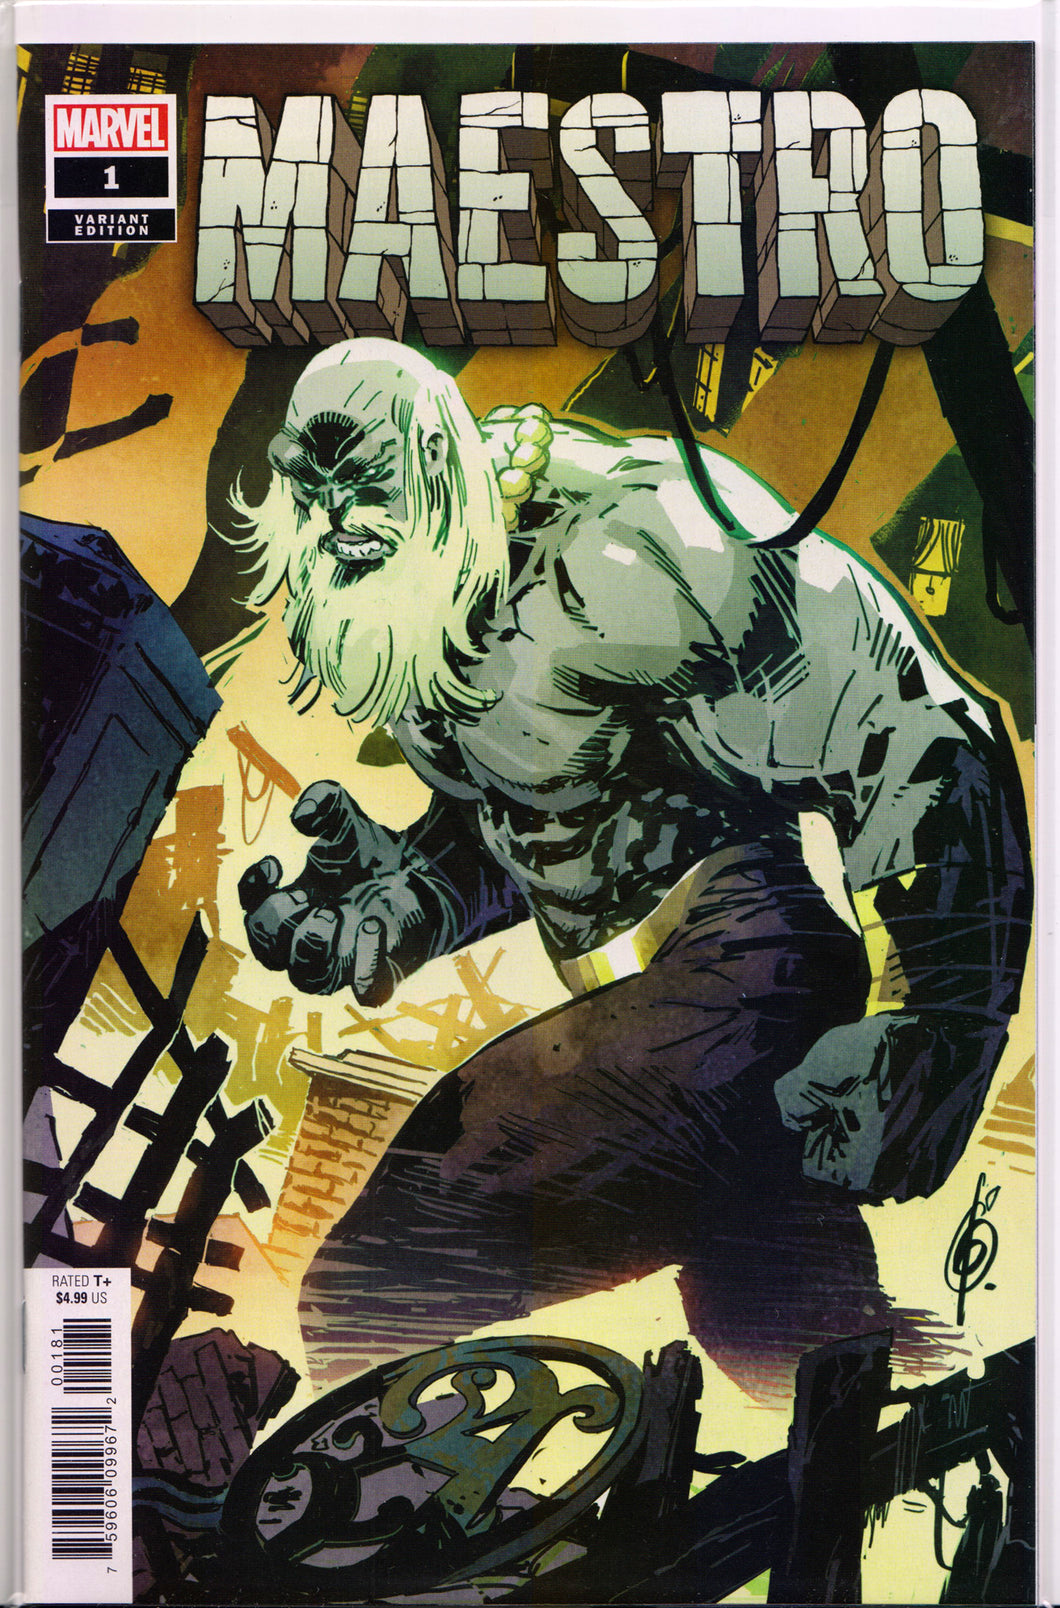 MAESTRO #1 (RON GARNEY VARIANT) Comic Book ~ Marvel Comics Hulk